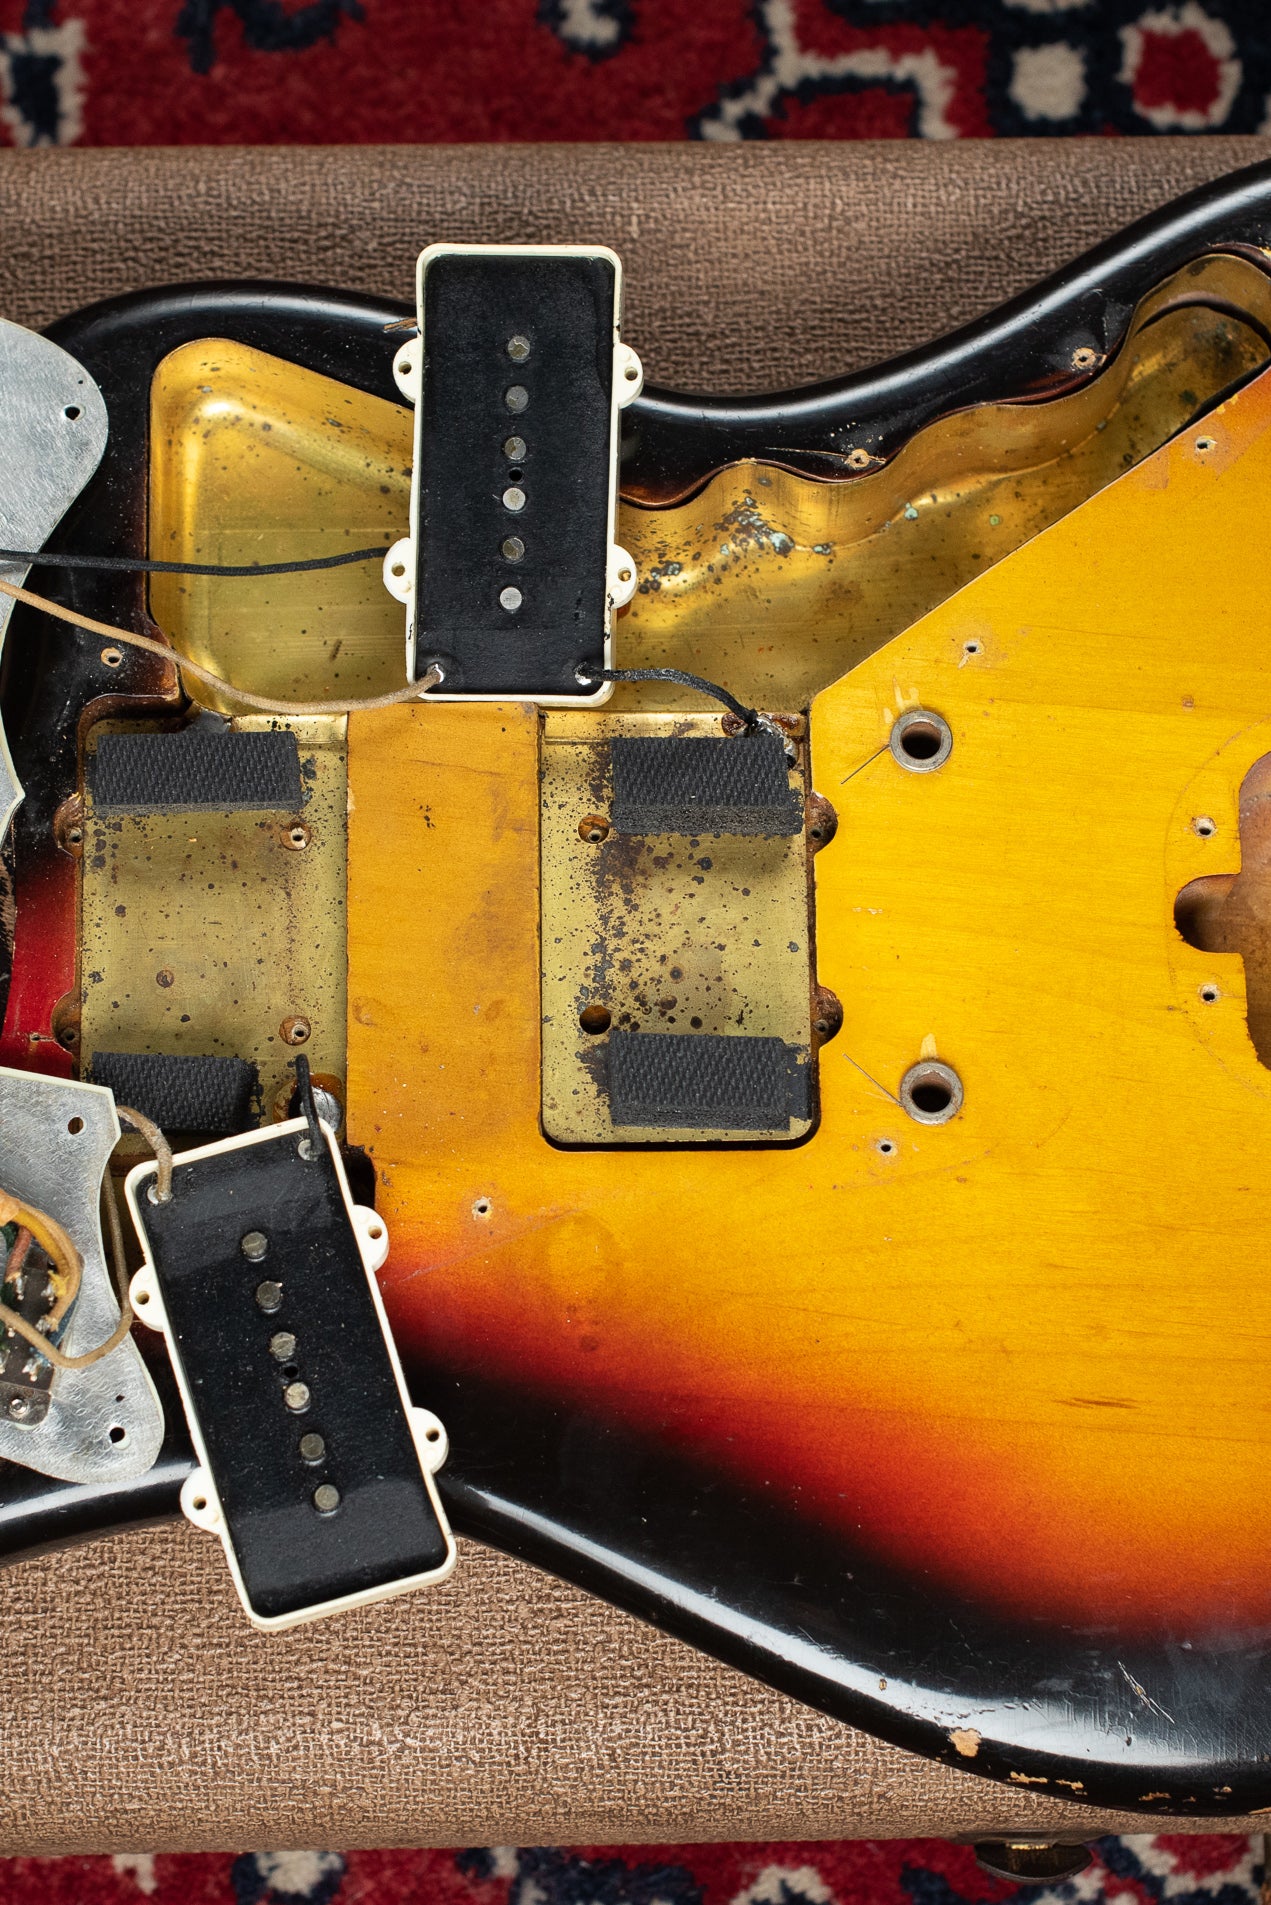 Under pickguard, "Mary" signature, Vintage 1963 Fender Jazzmaster electric guitar